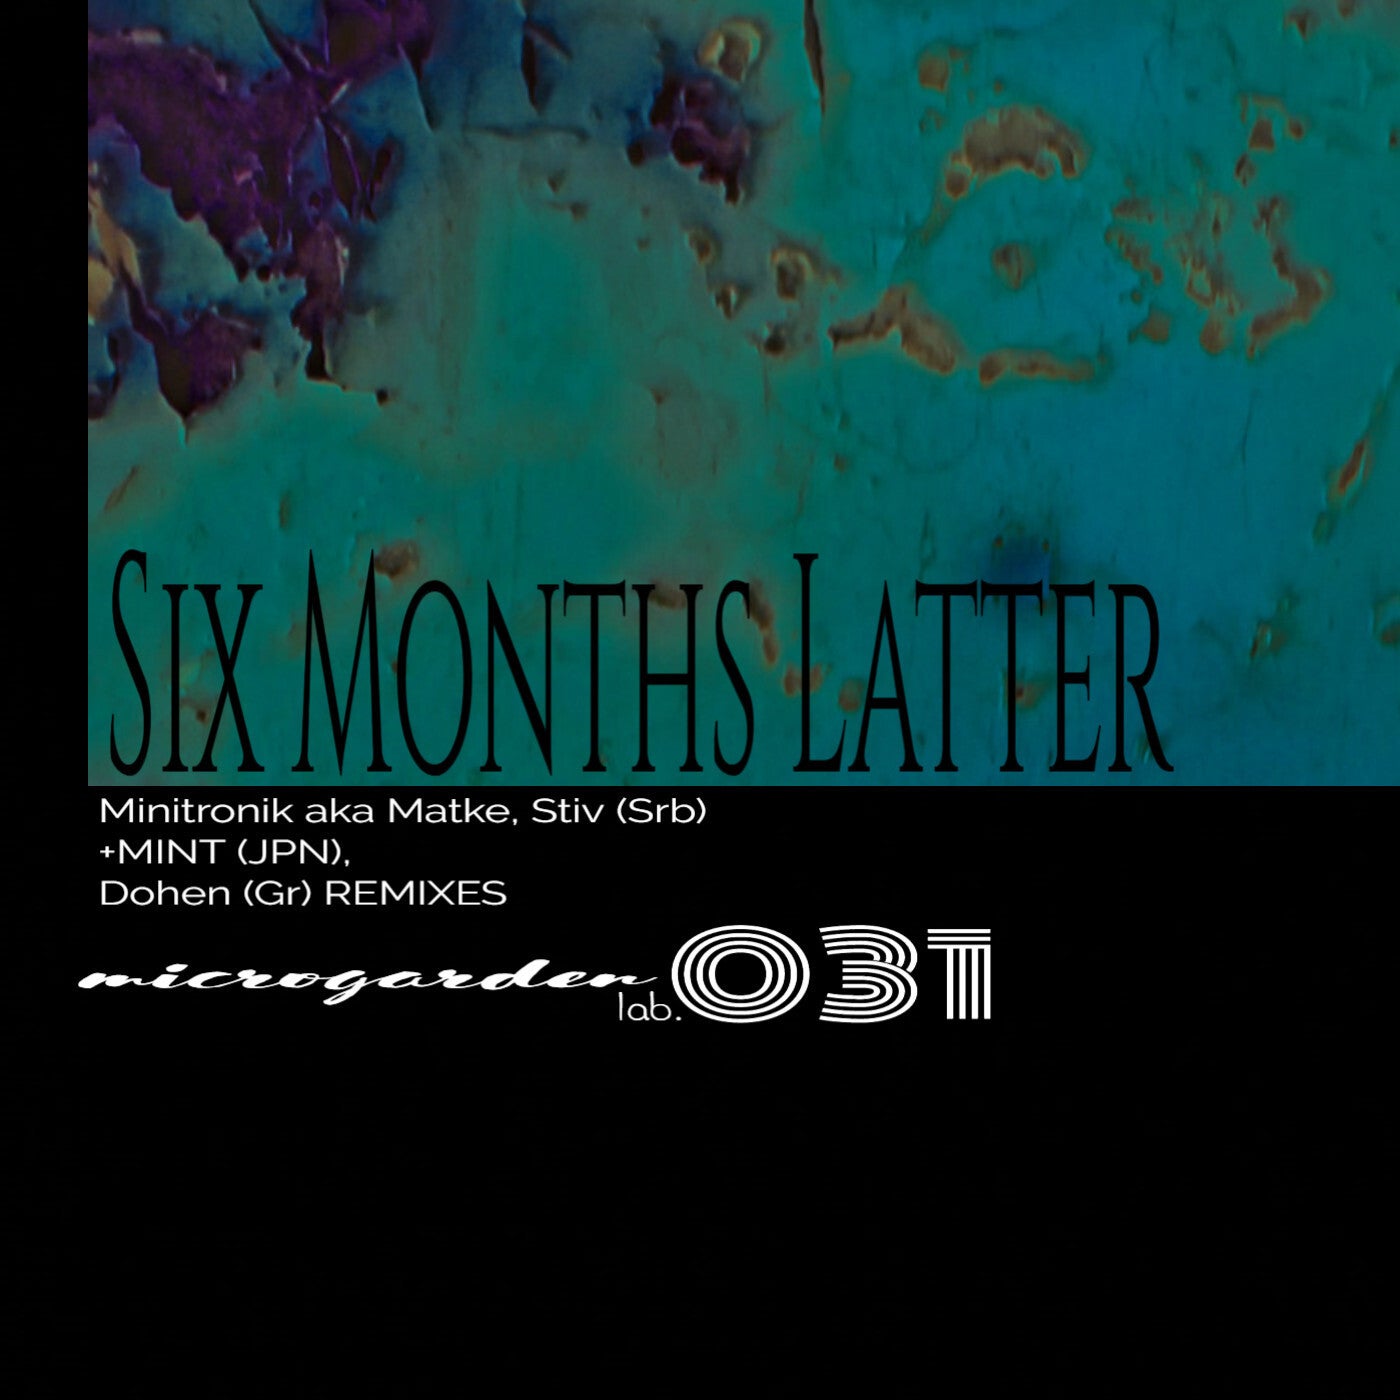 Six Months Latter EP